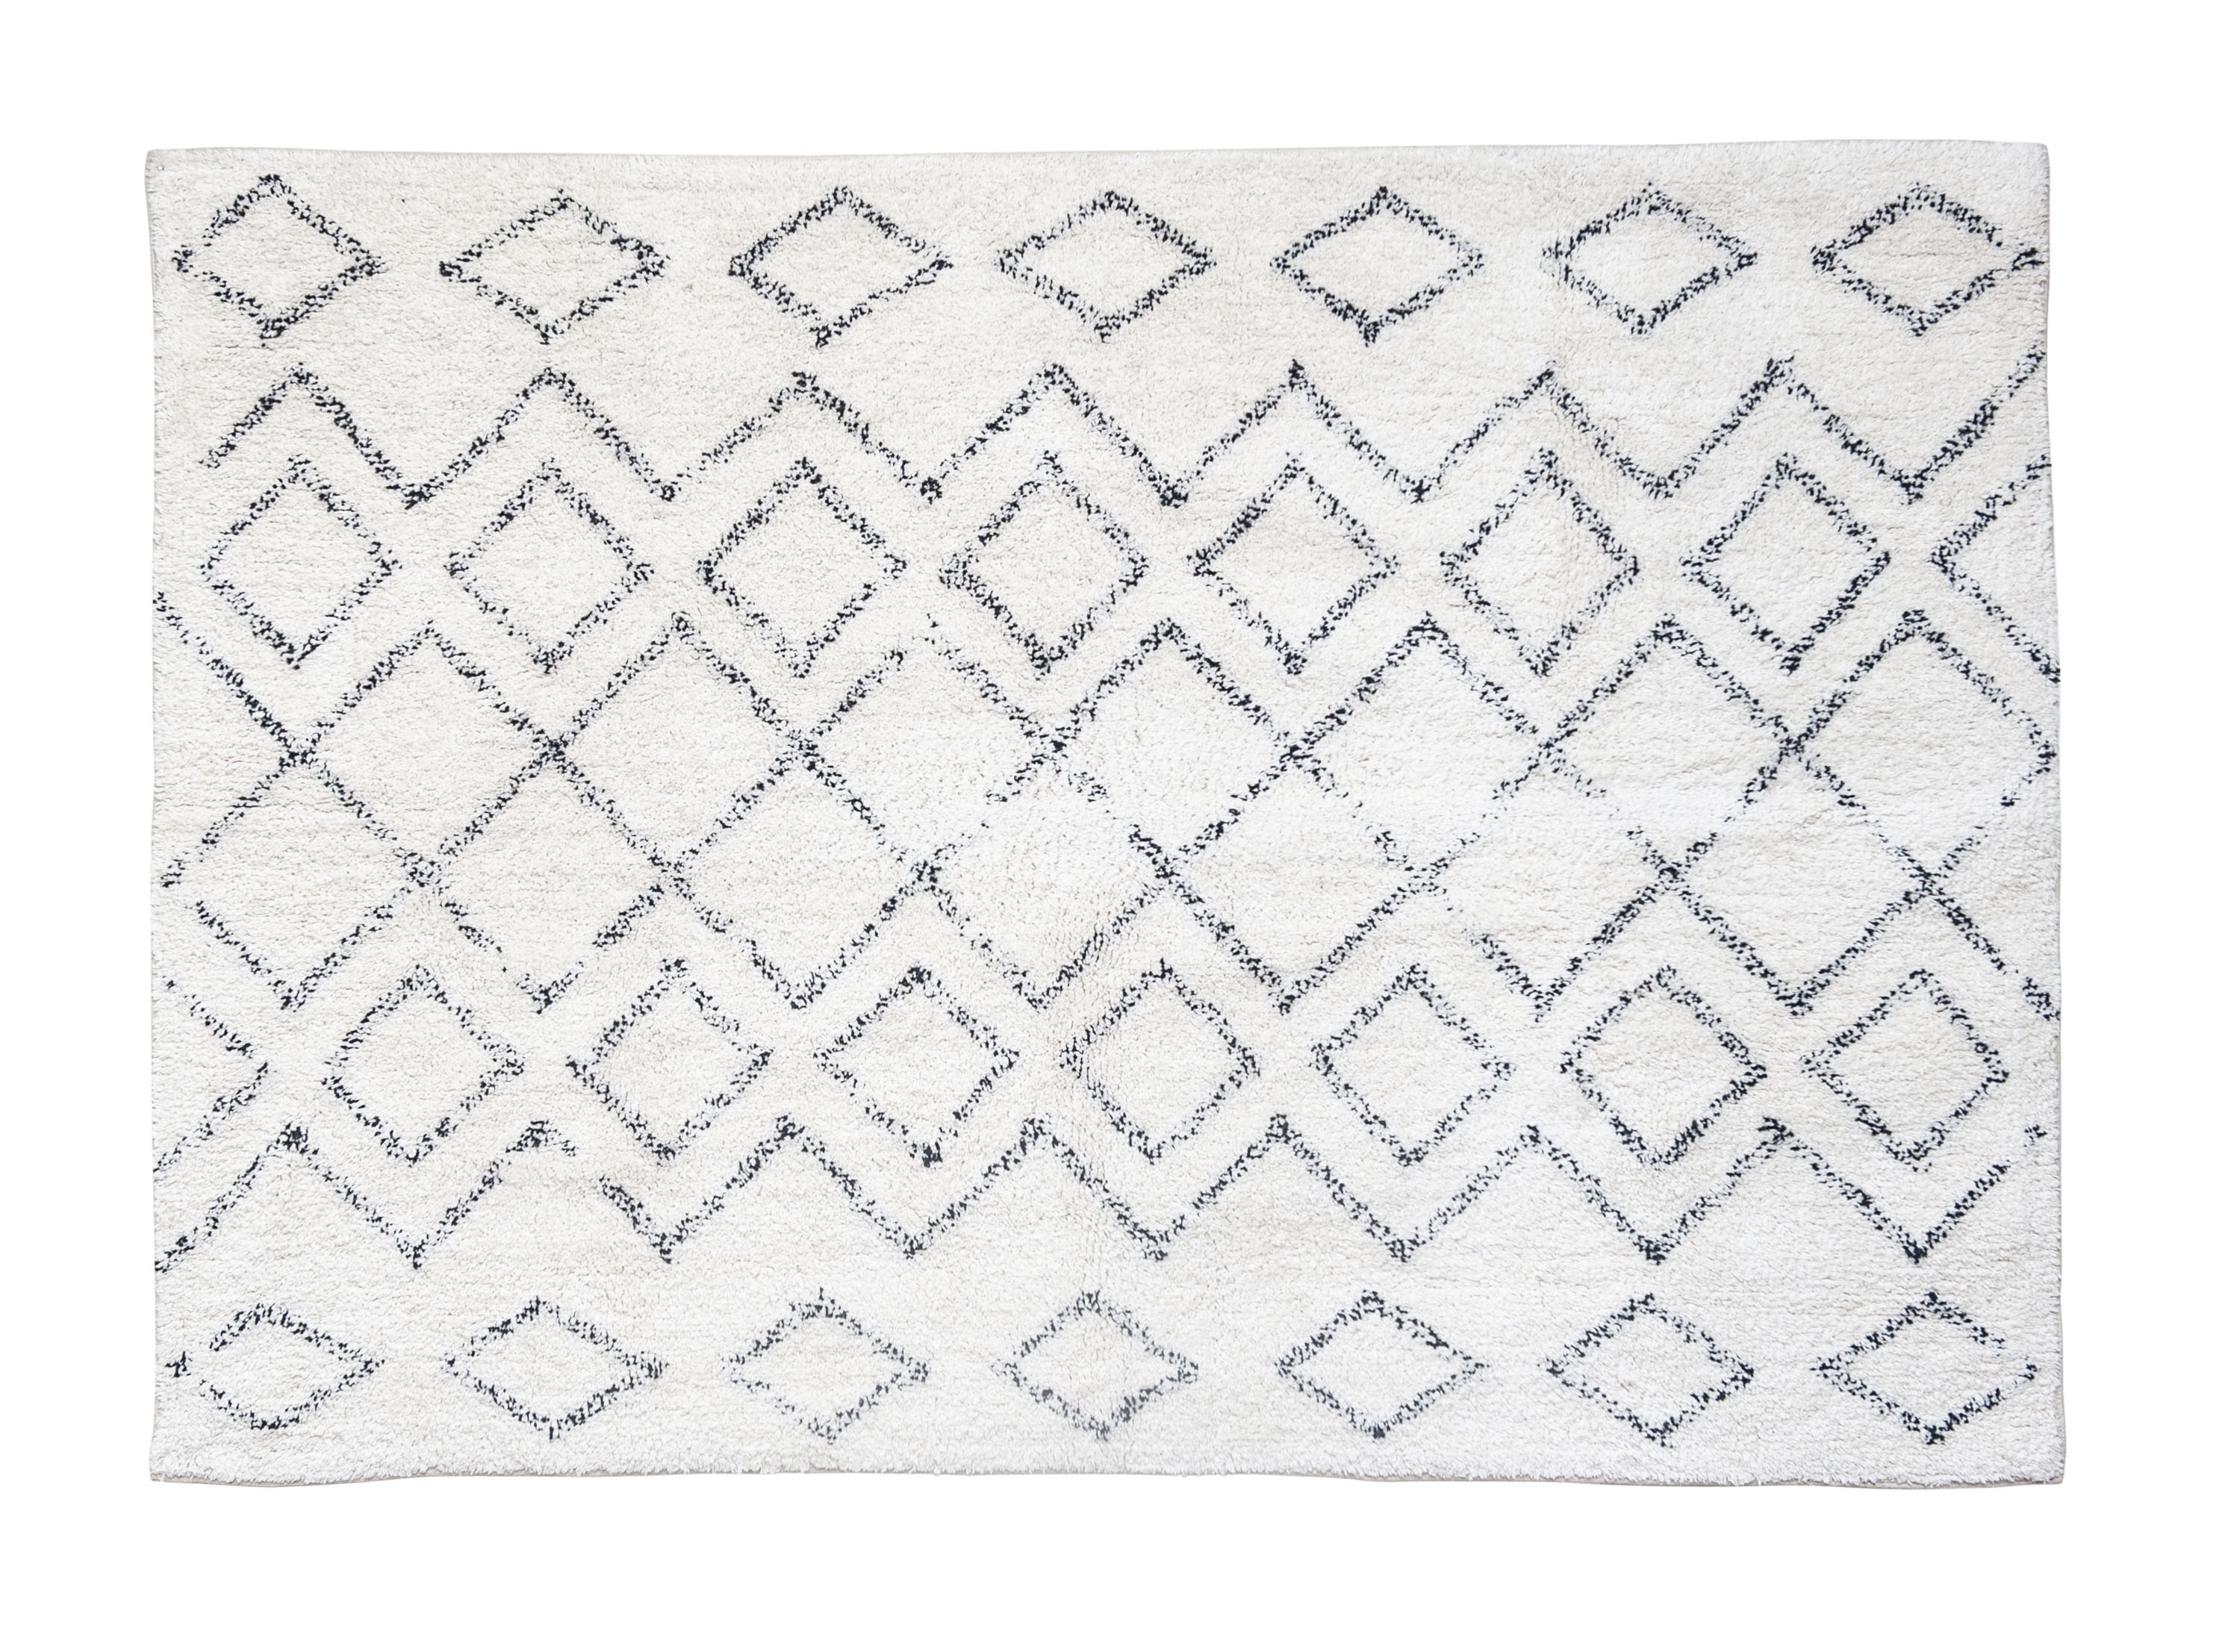 4' x 6' White Cotton Rug with Black Diamond Design - Image 0